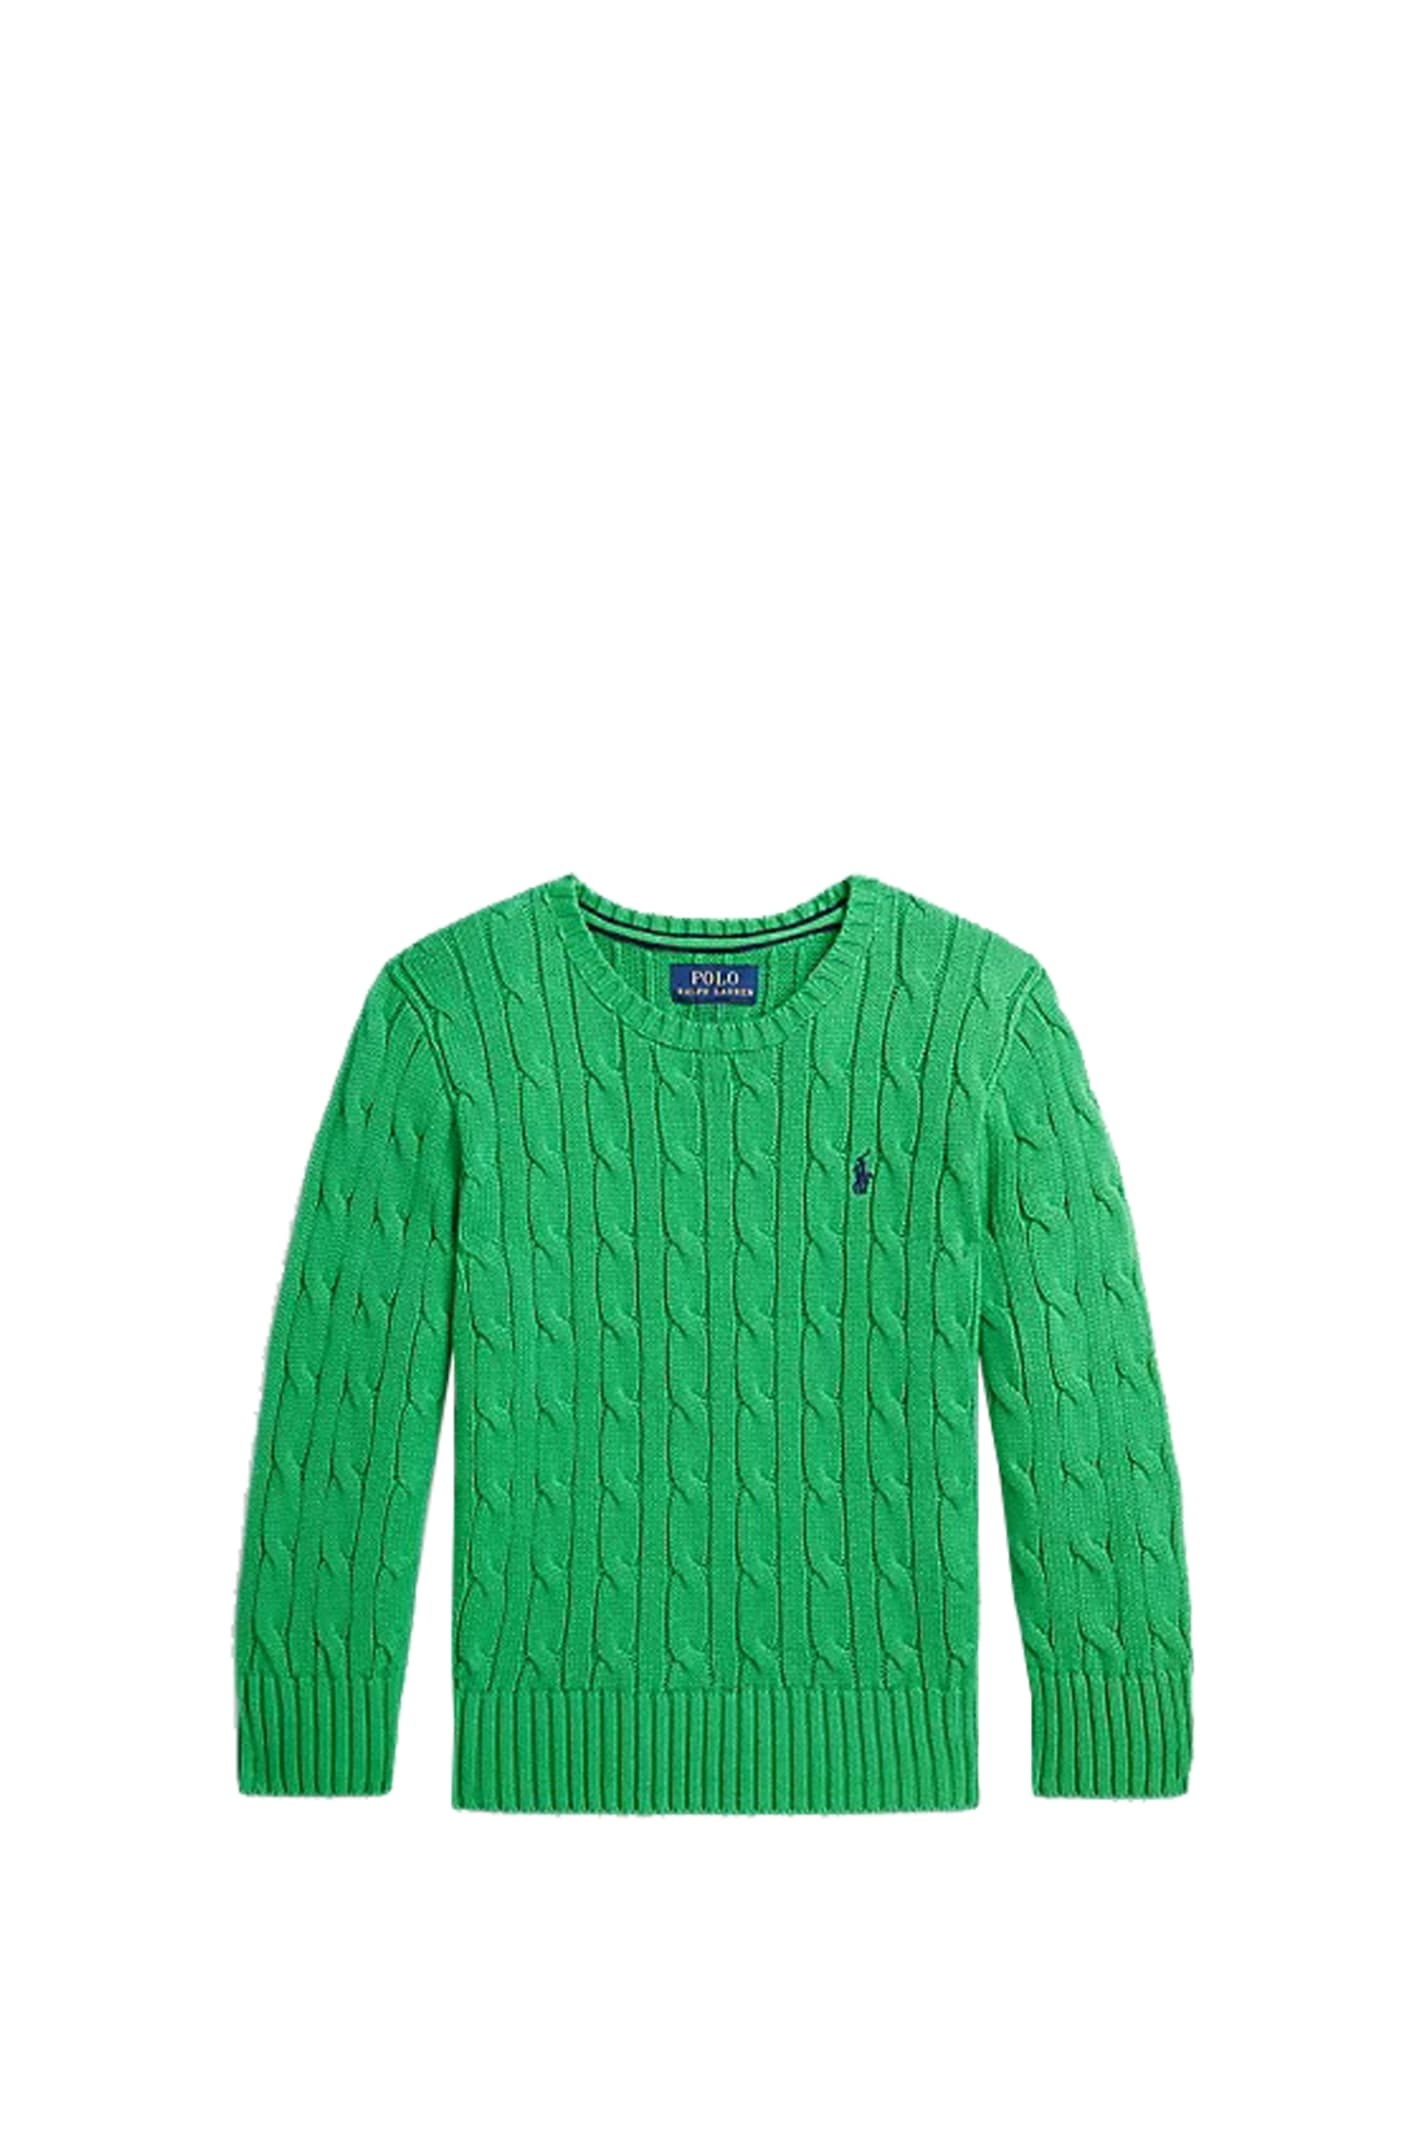 Ralph Lauren Cotton Cable Sweater